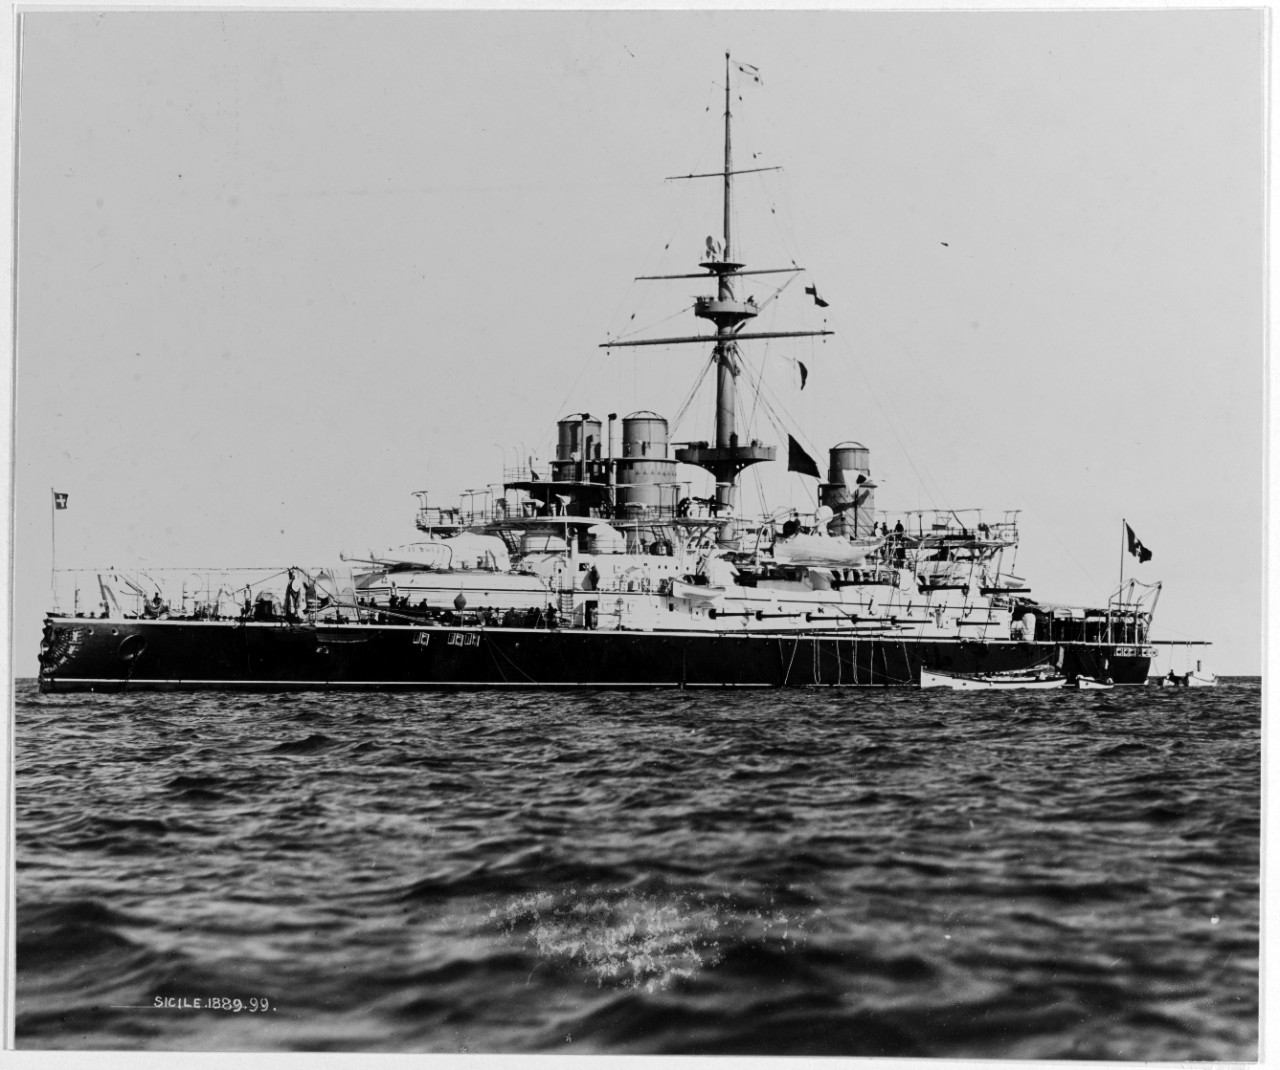 SICILIA (Italian battleship, 1891-1923)